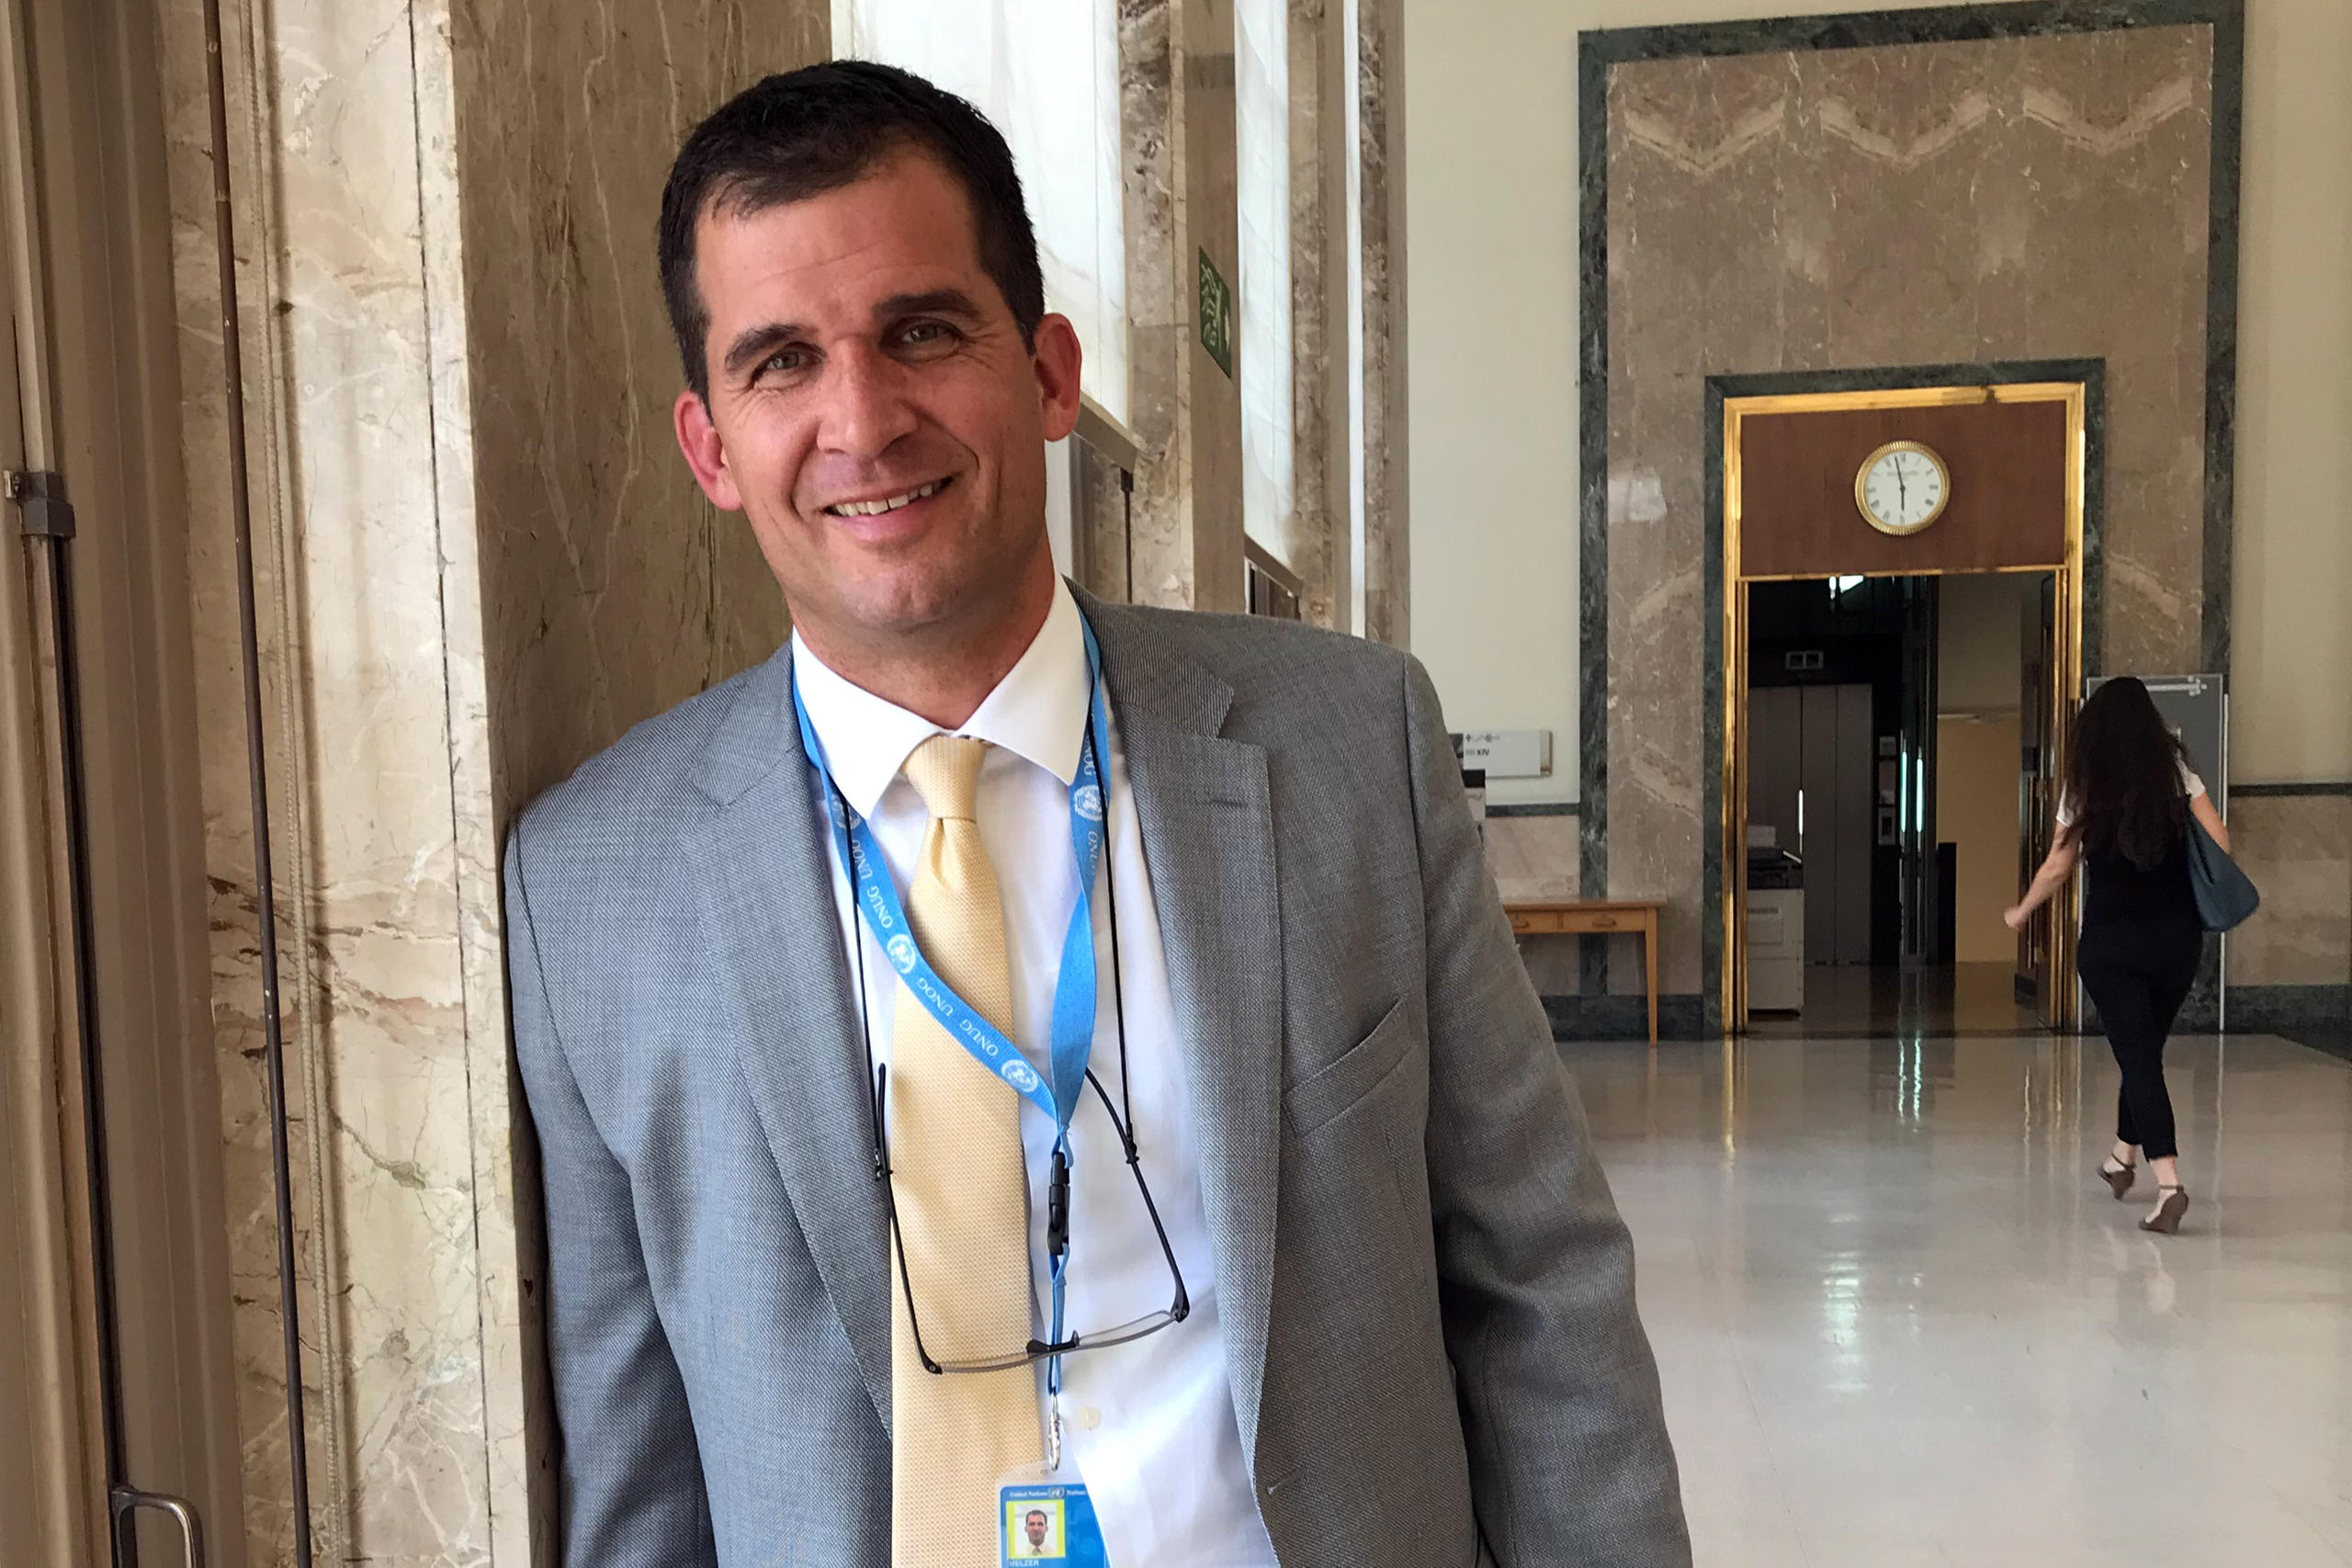 Nils Melzer at the UN in Geneva